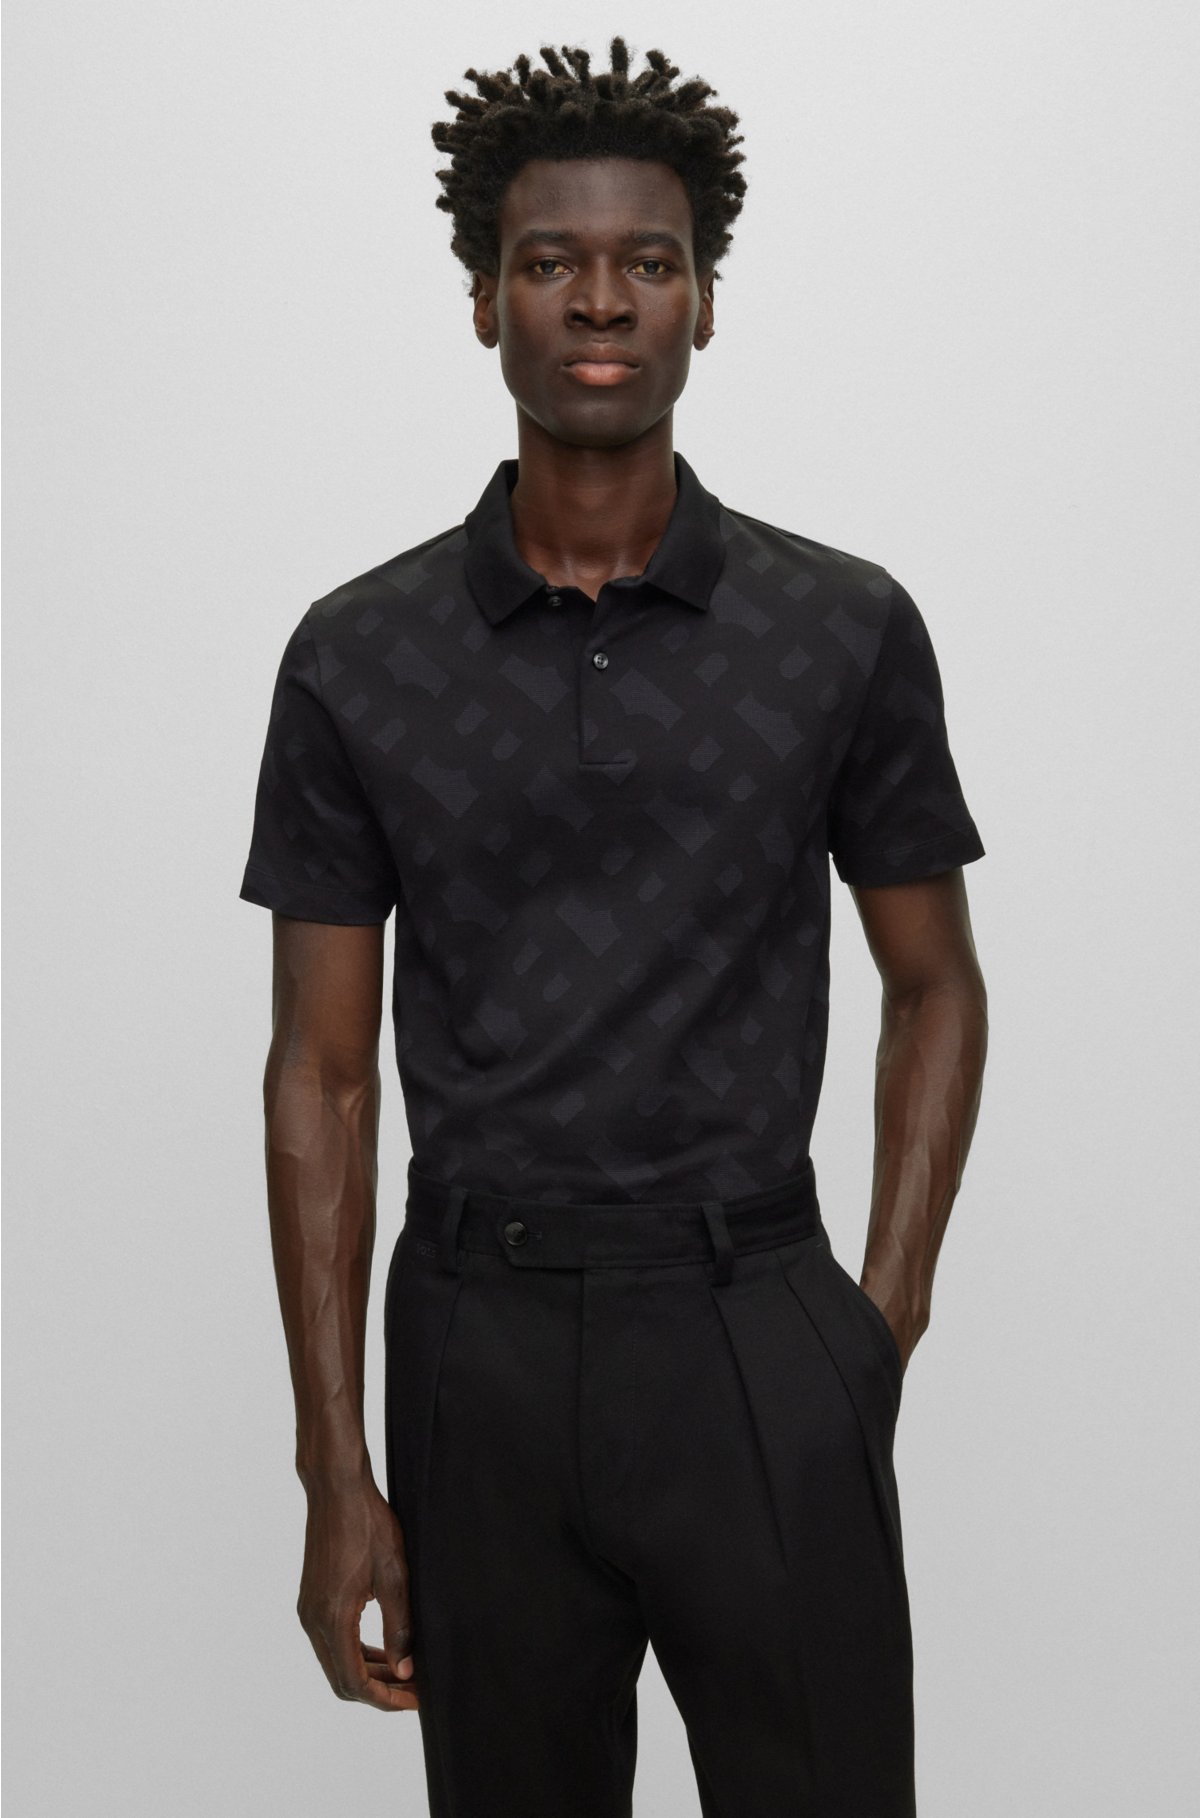 Louis Vuitton NBA Monogram Buttoned Shirt